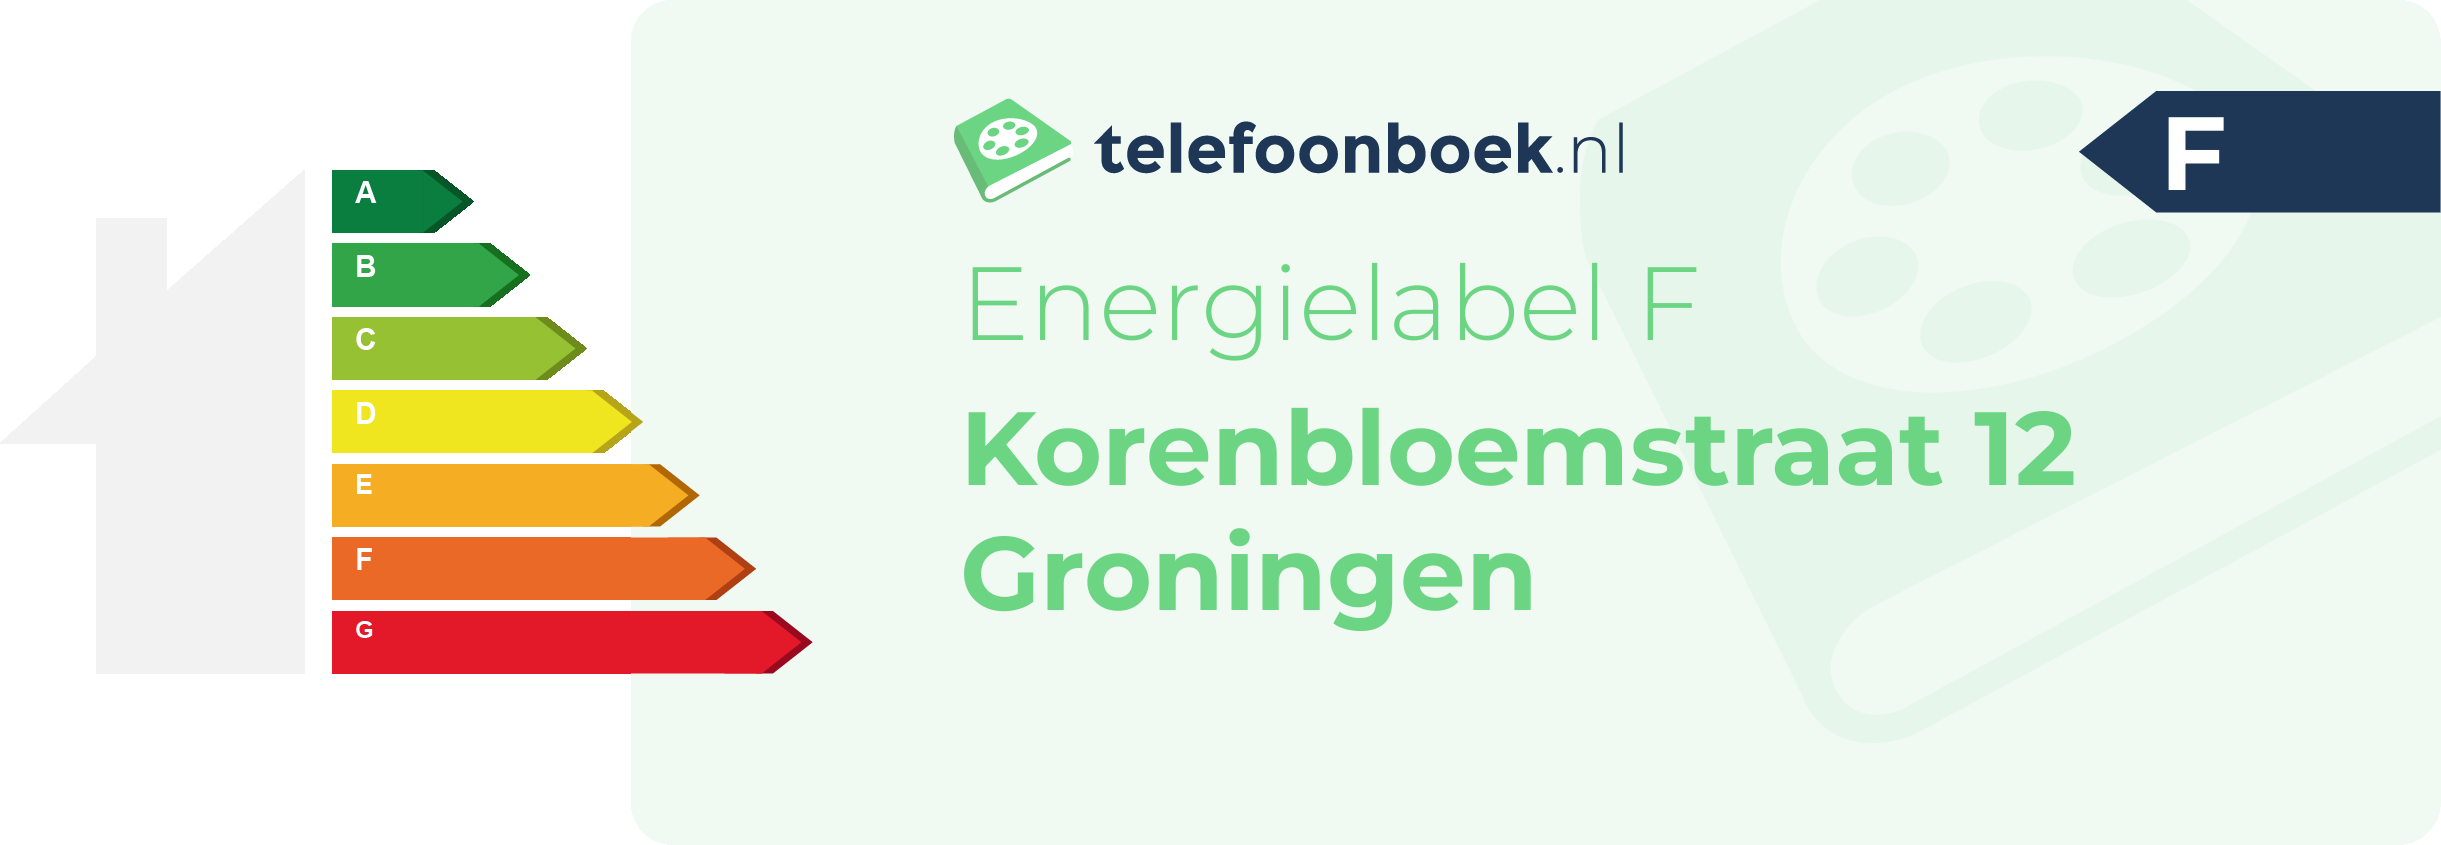 Energielabel Korenbloemstraat 12 Groningen